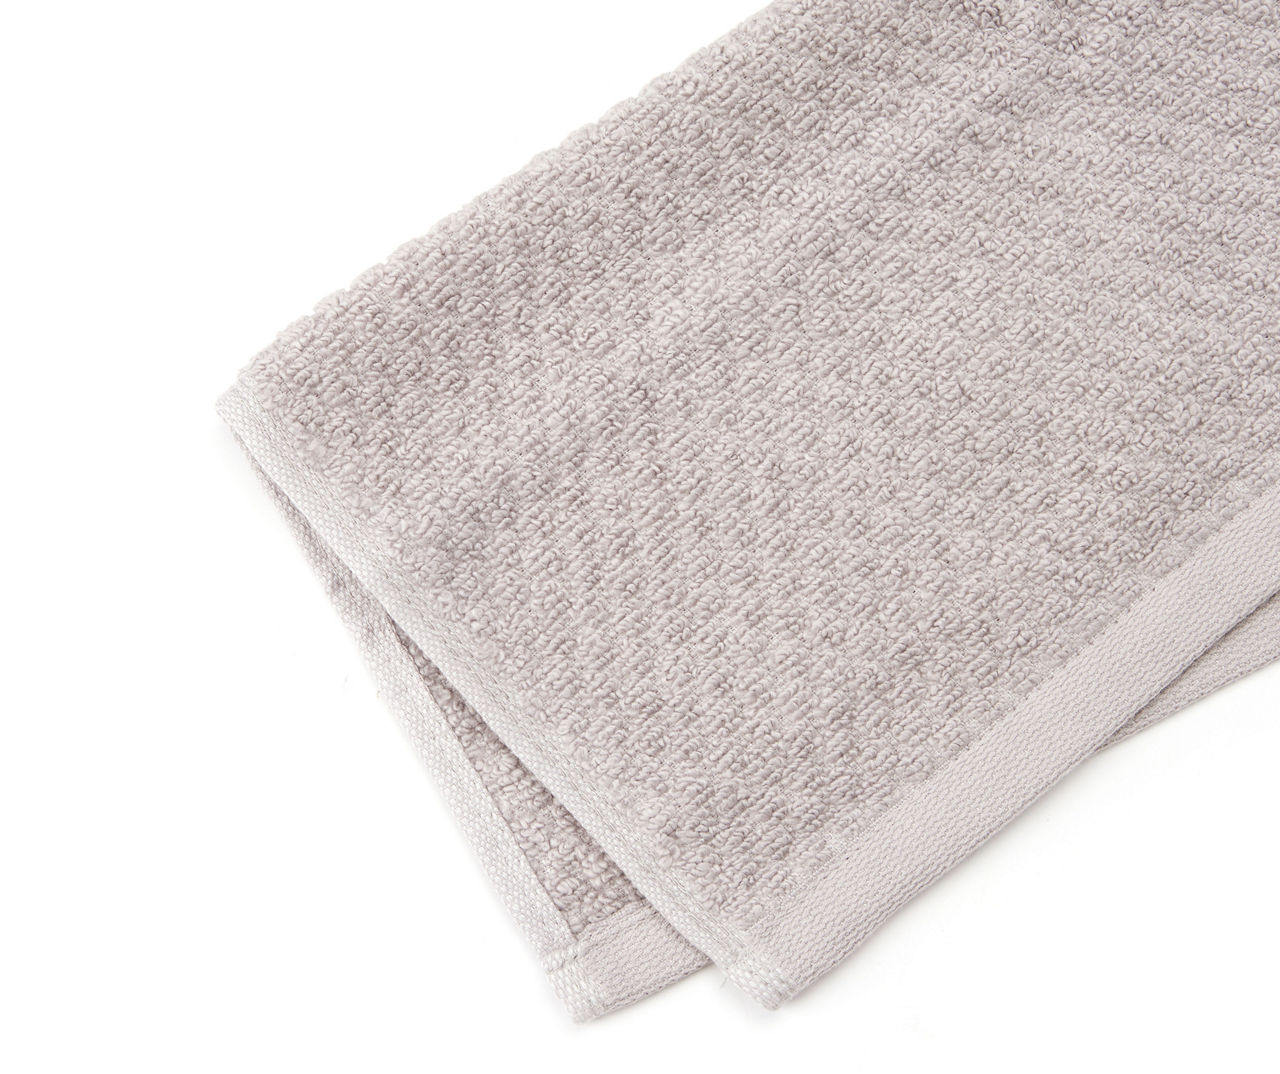 lunar Rock Seventeen Piece Soft Cotton Bath Towel Set